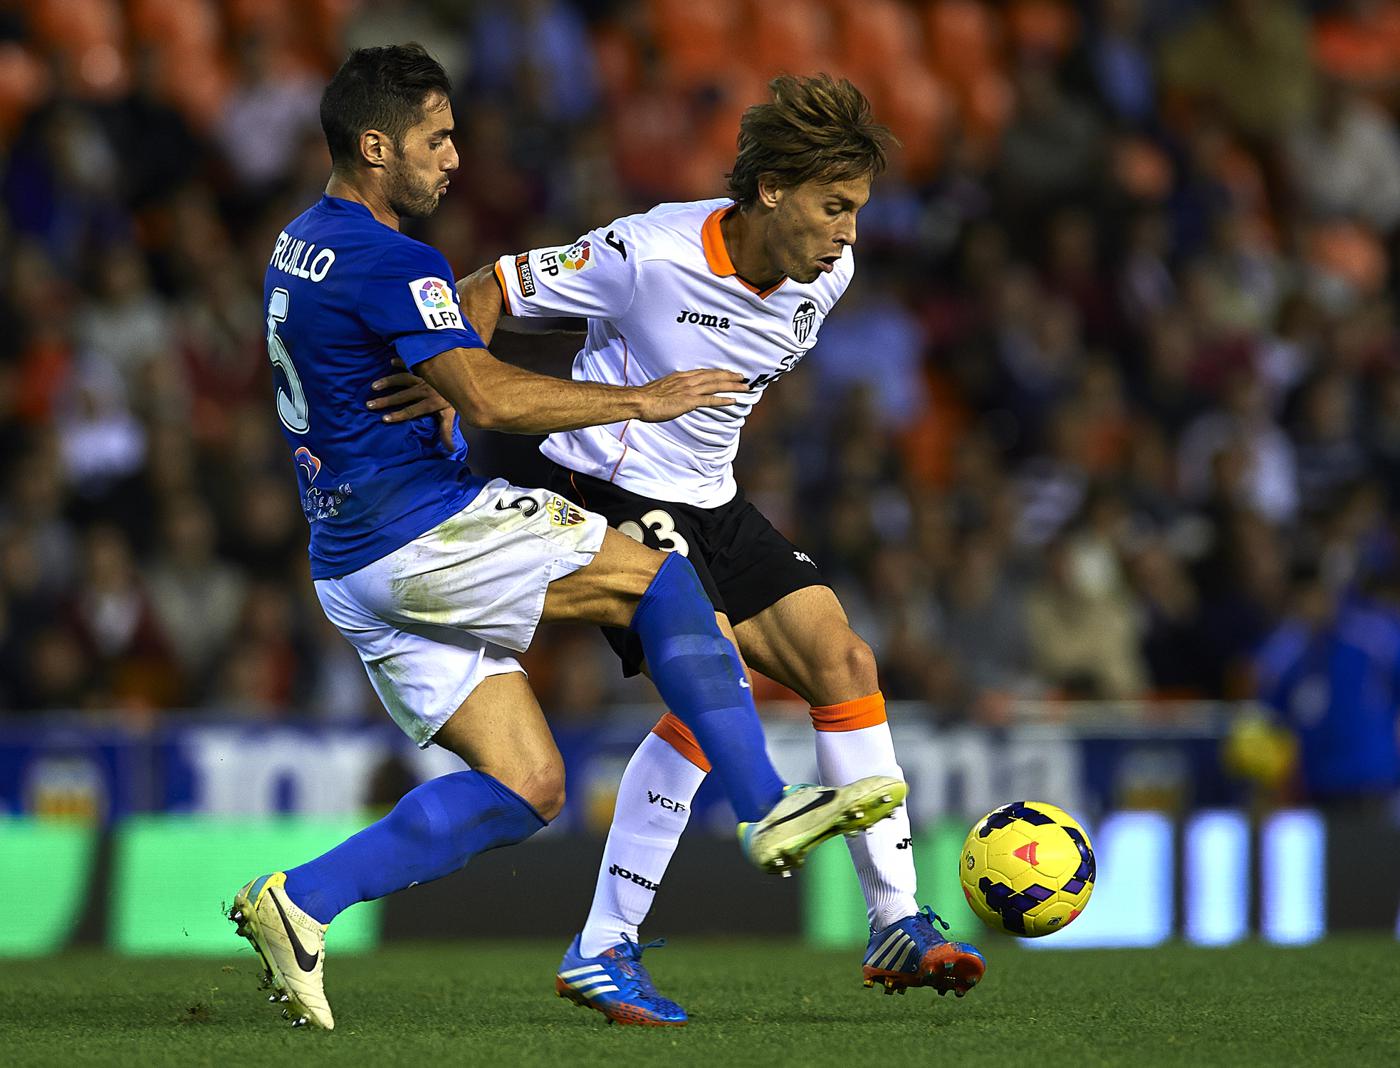 Almeria - Valencia - 2:1. Spanish Championship, 28th round. Match review, statistics